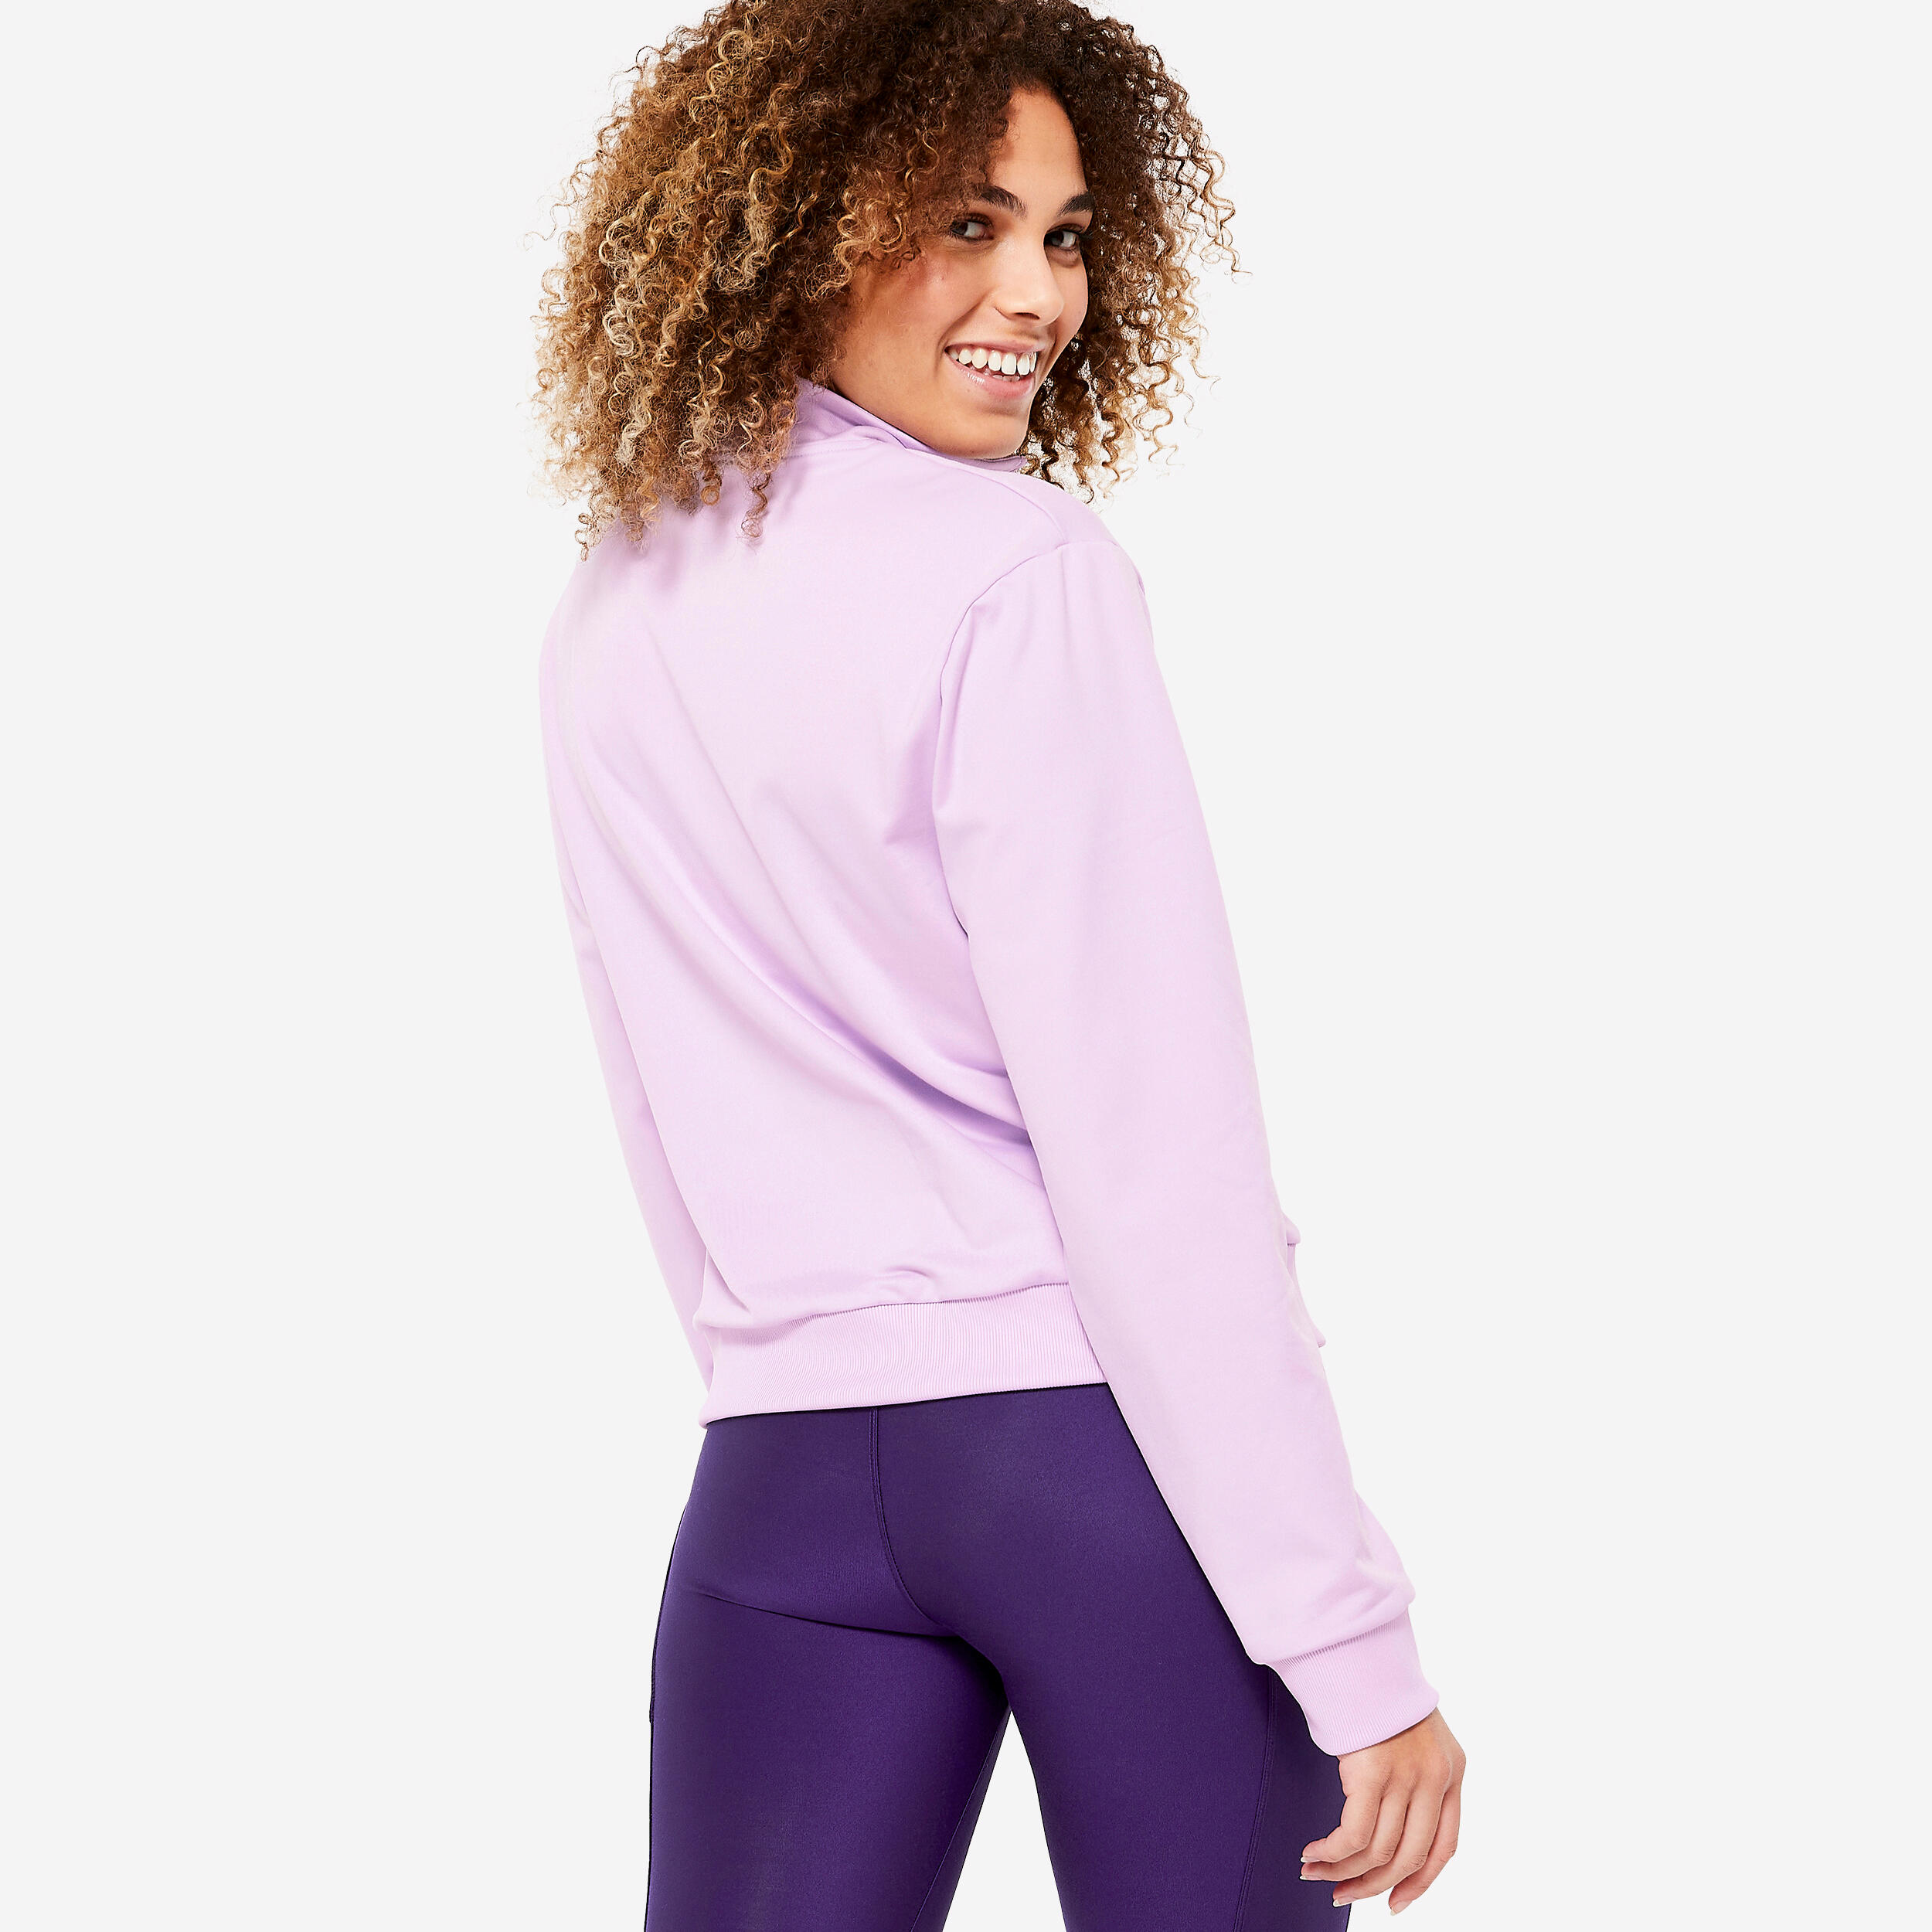 Women's Quarter-Zip Long-Sleeved Fitness Cardio Sweatshirt - Lilac 4/6